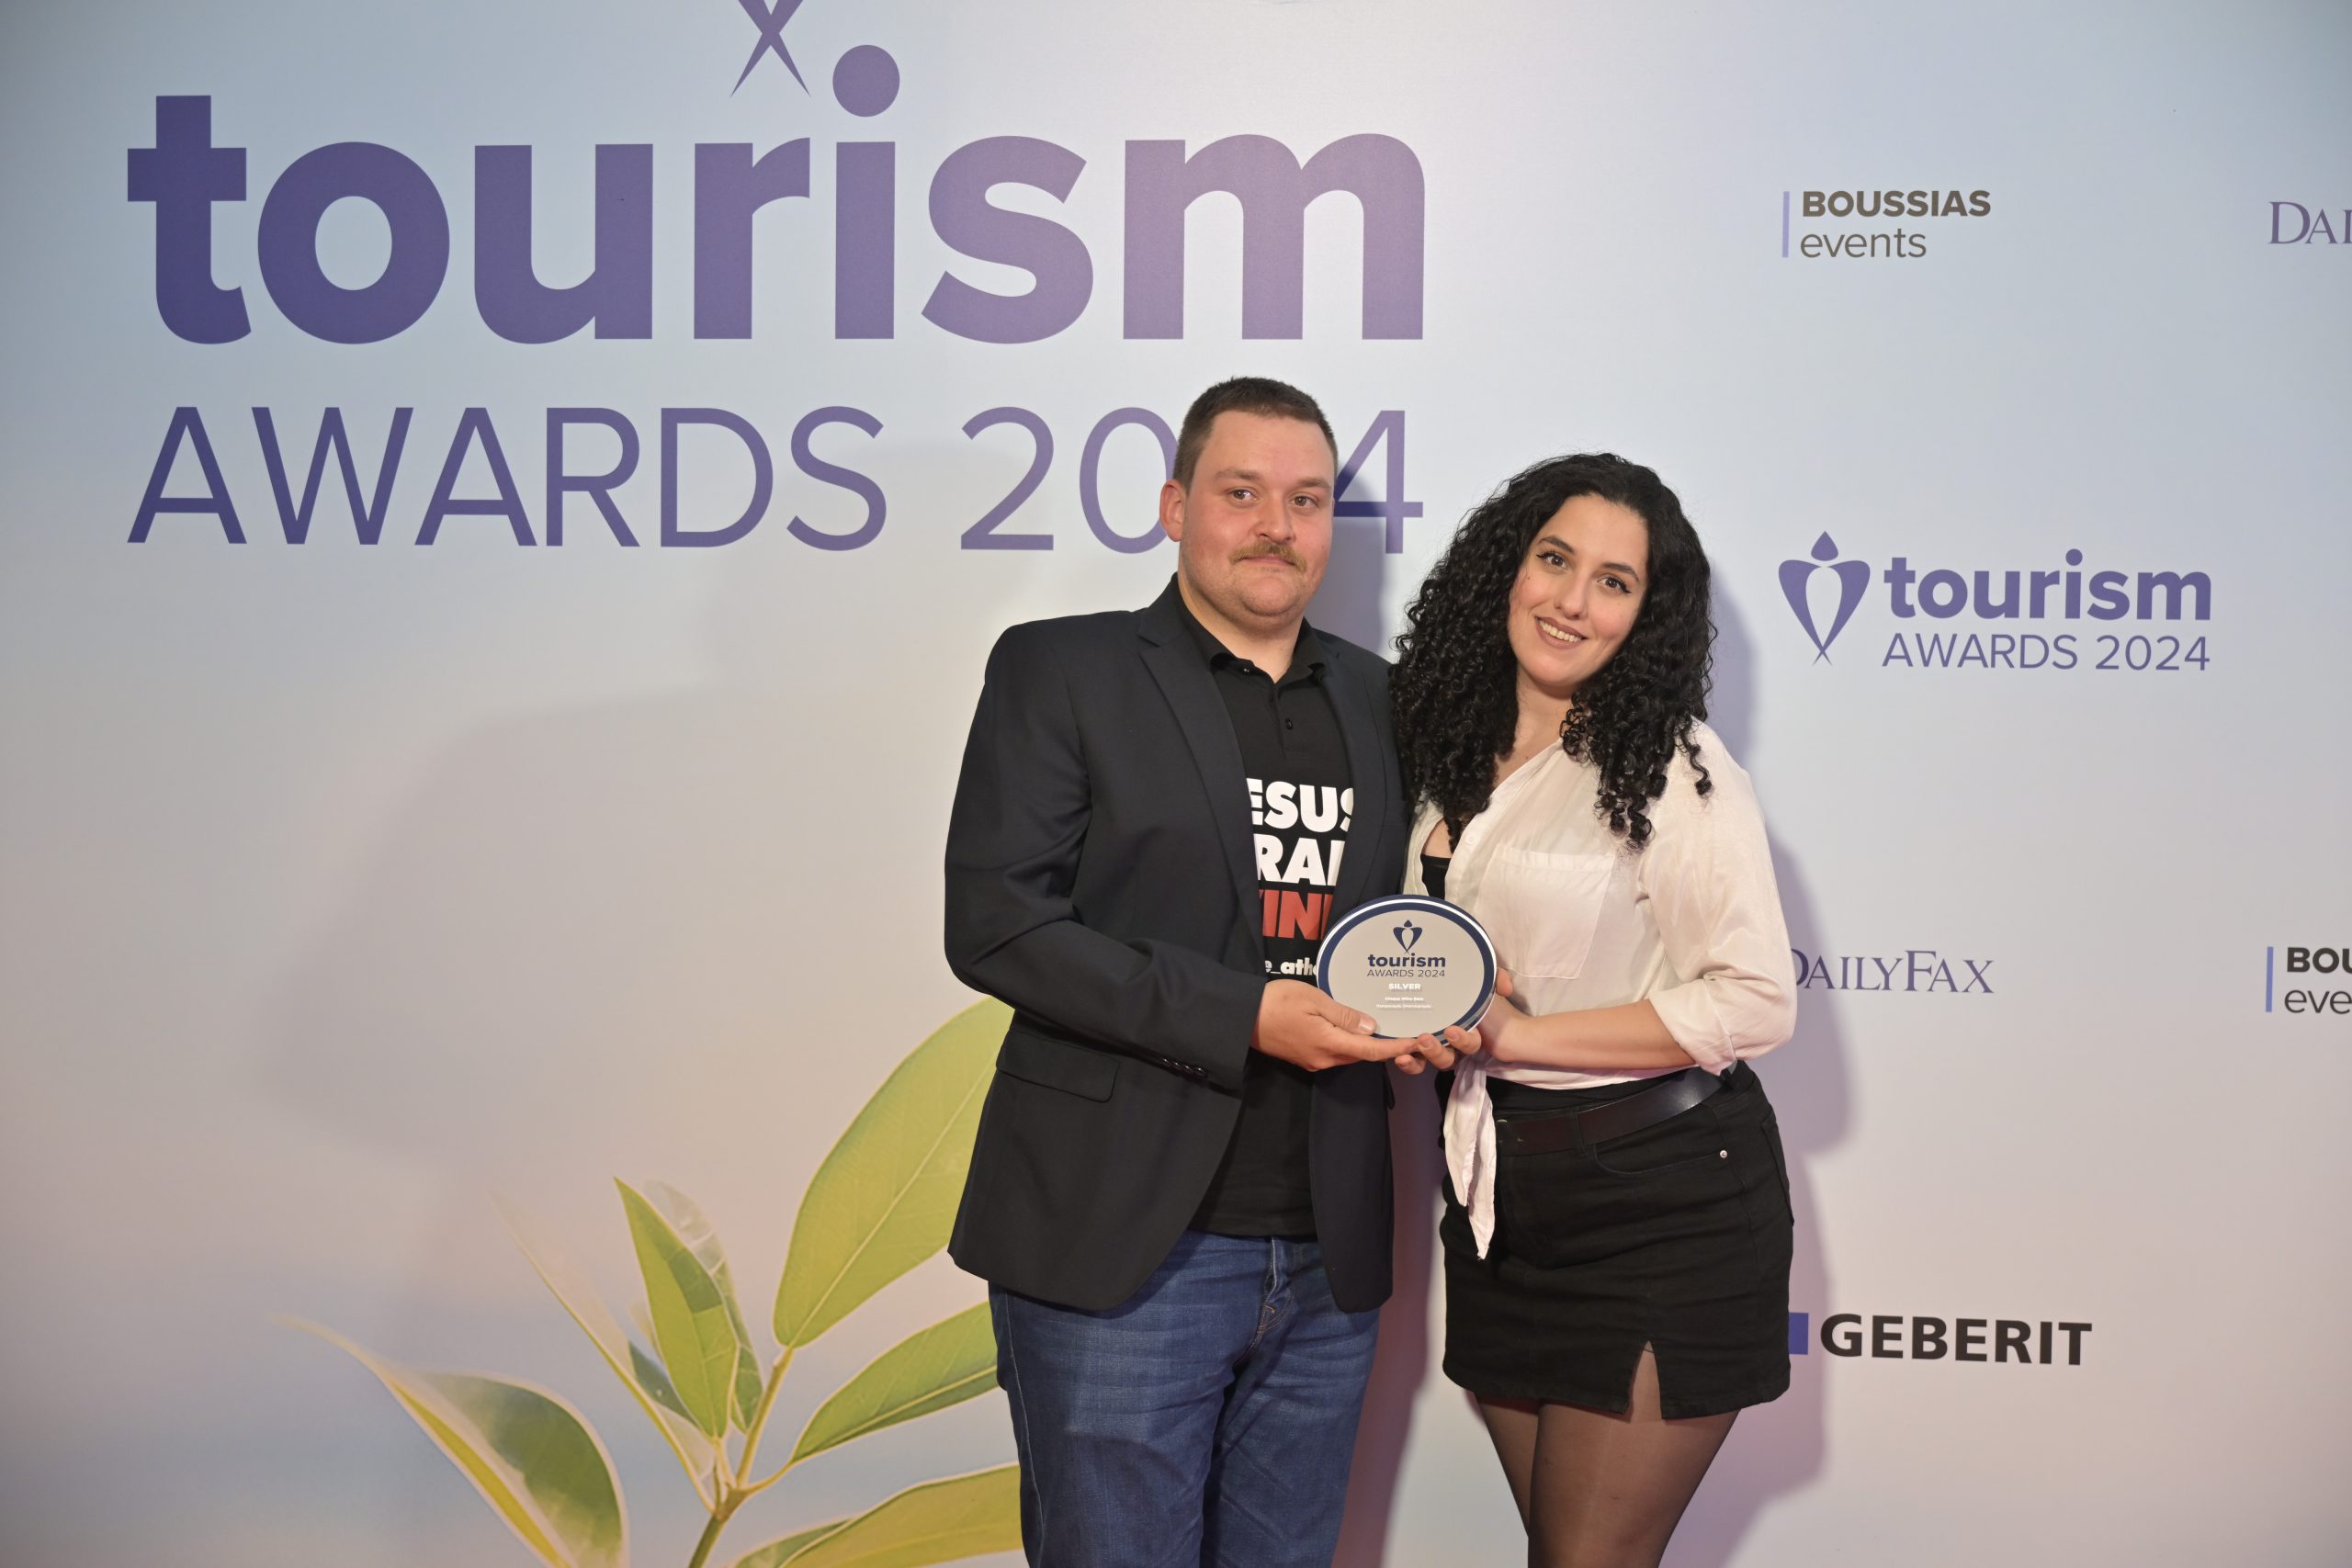 Tourism Awards 2024 – Cinque Wine & Deli’s winning streak continues!